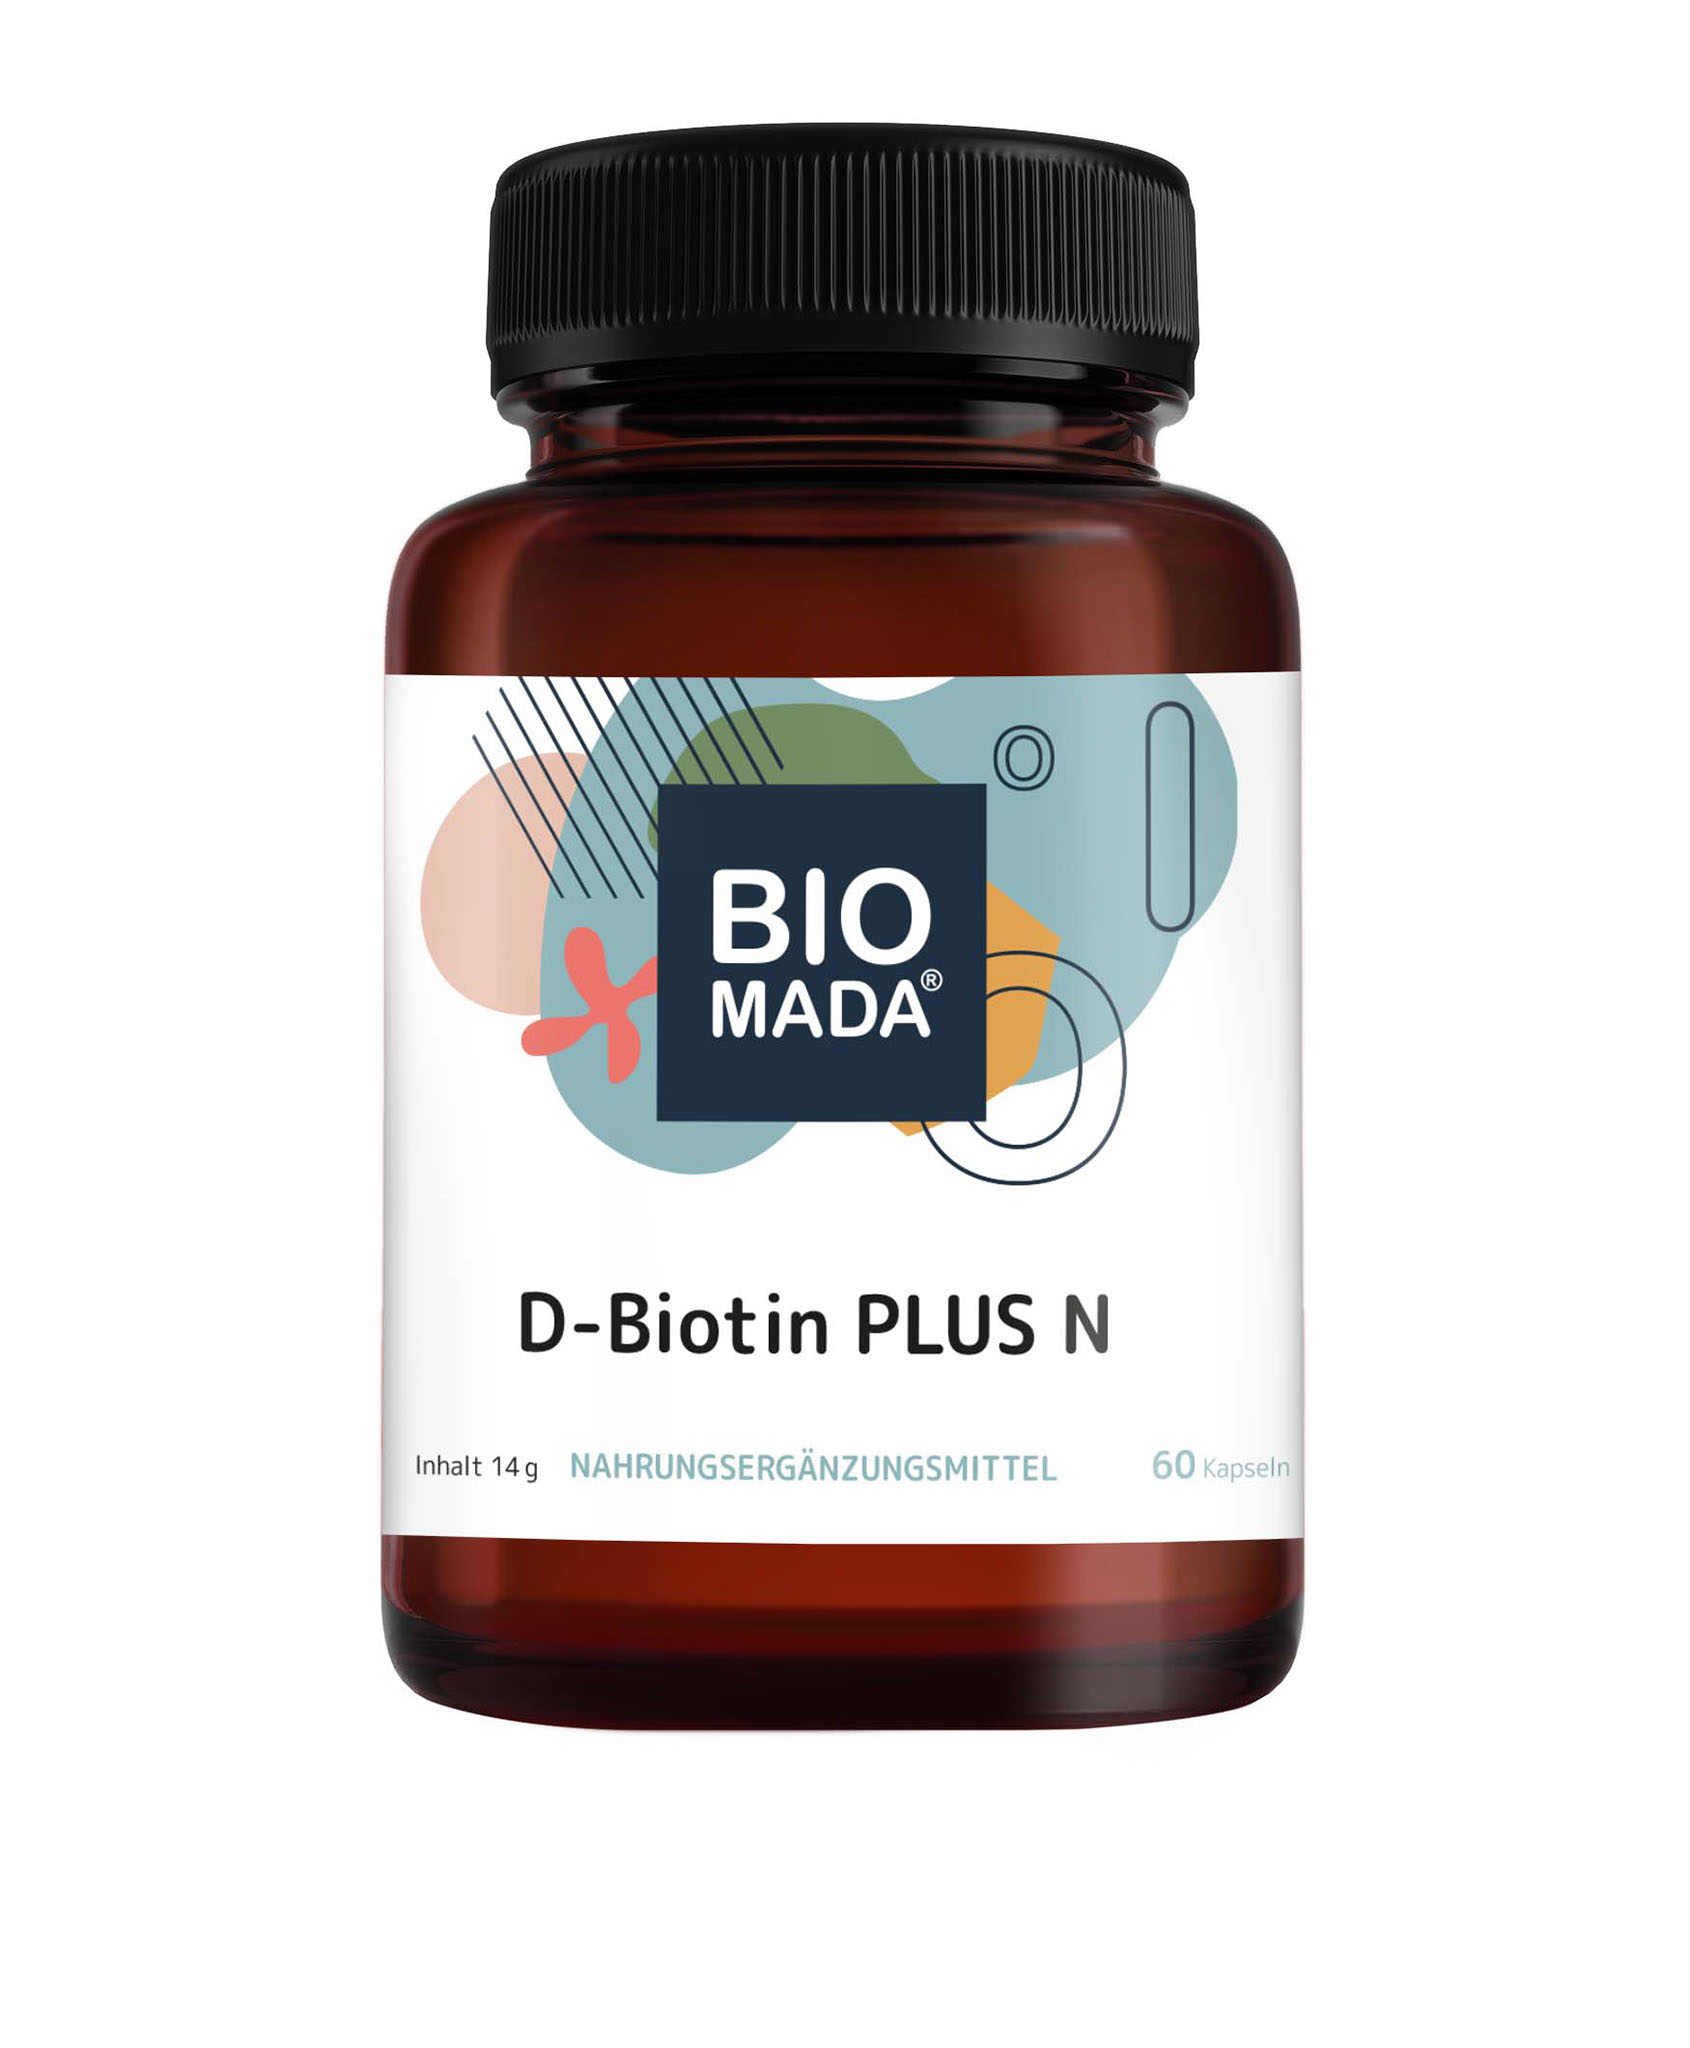 D-Biotin PLUS N